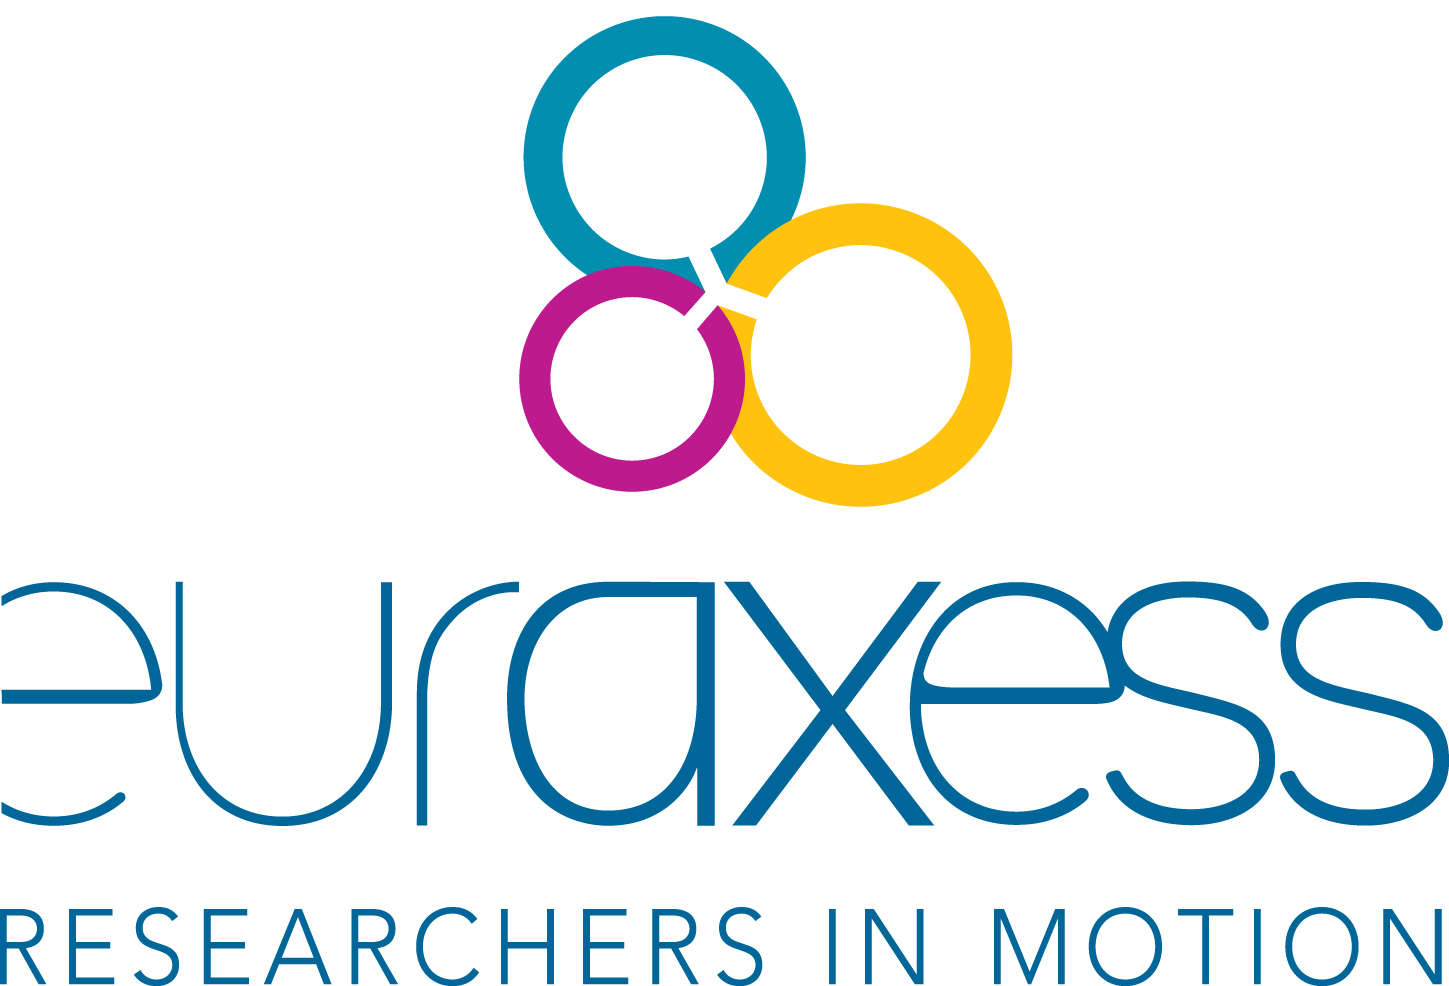 euraxess-research-in-motion logo